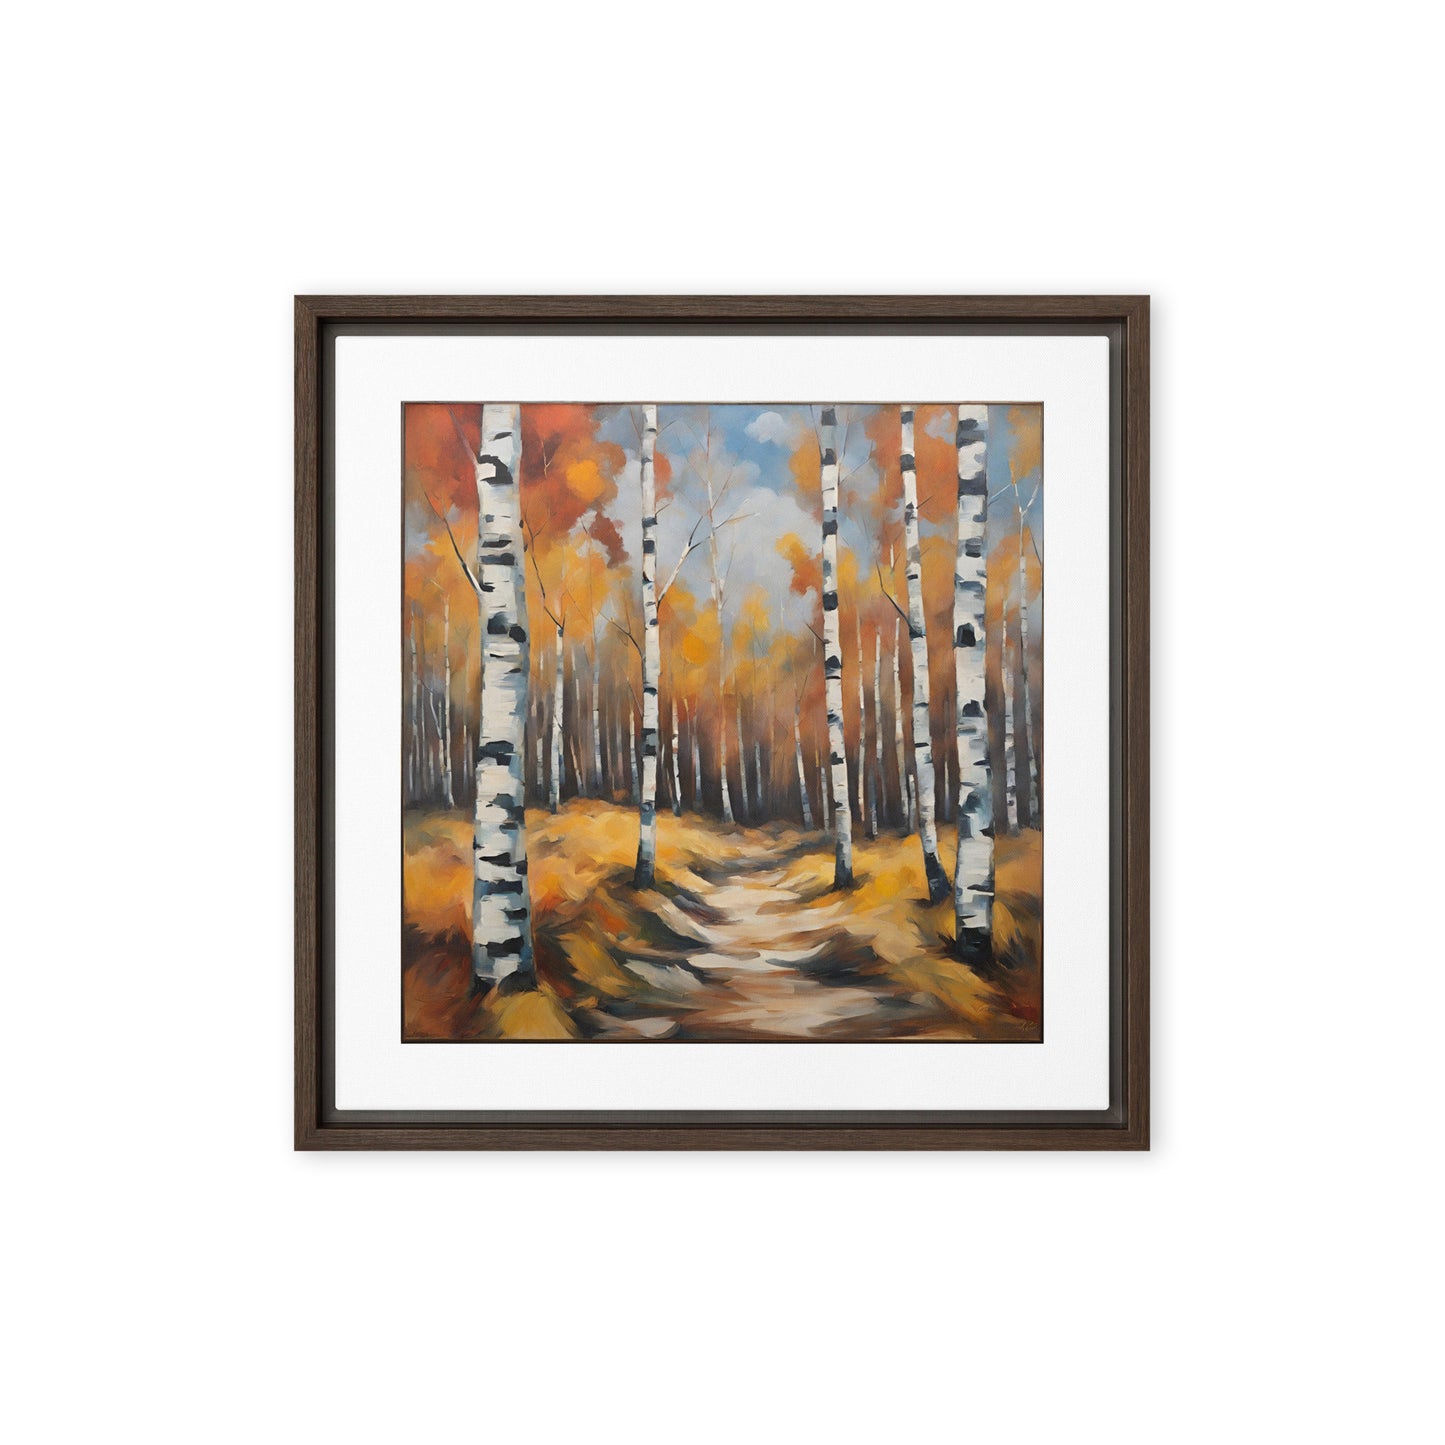 Birch way - Framed canvas